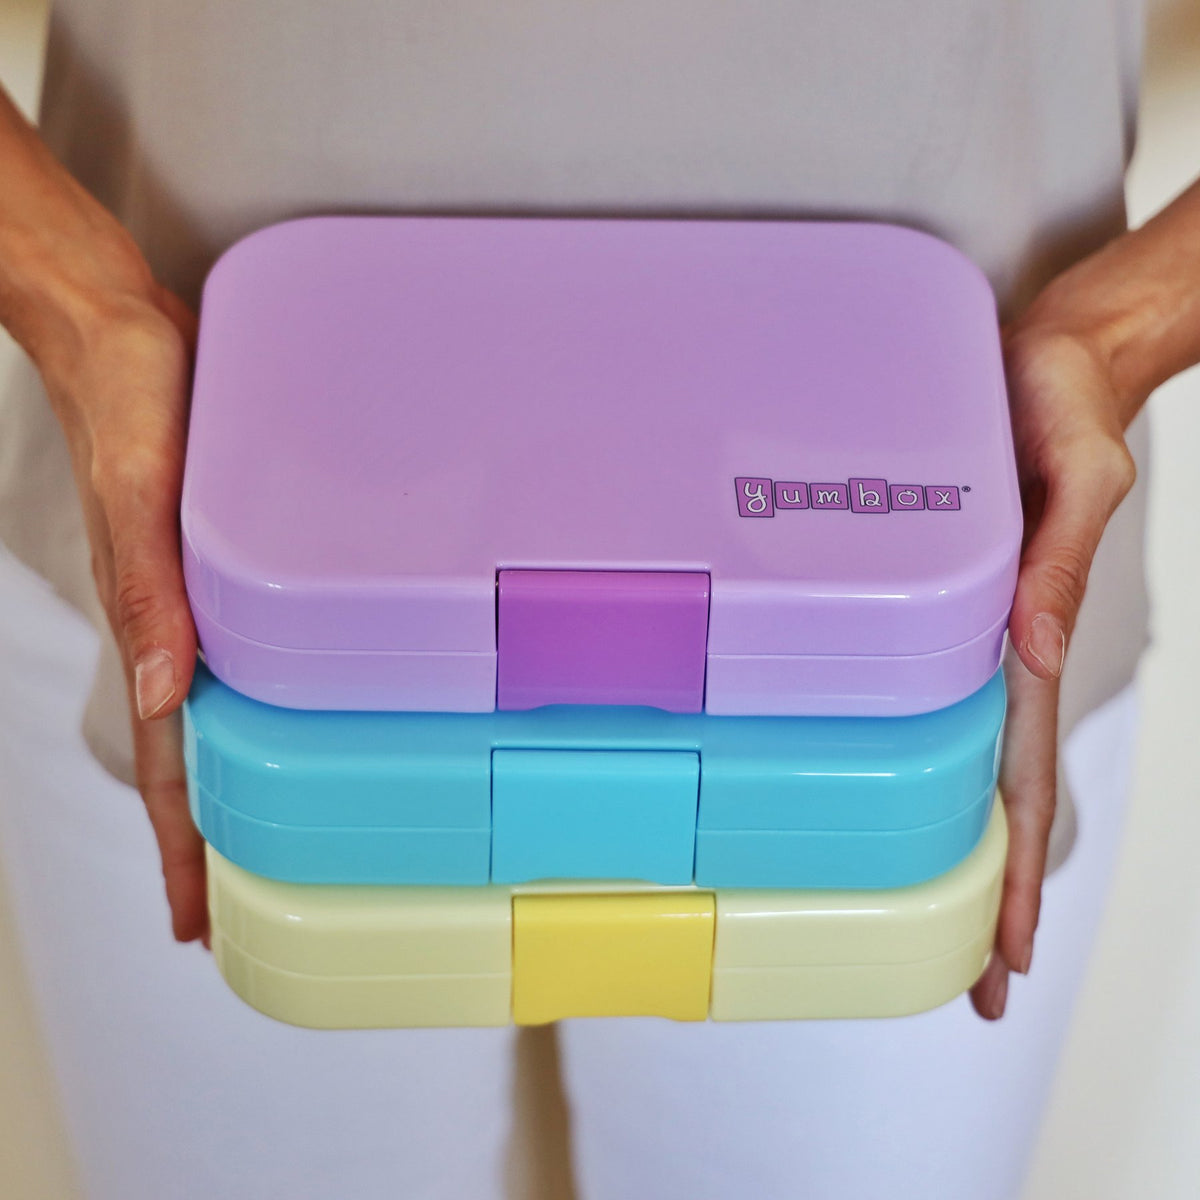 yumbox-panino-lila-purple-4-compartment-lunch-box- (5)